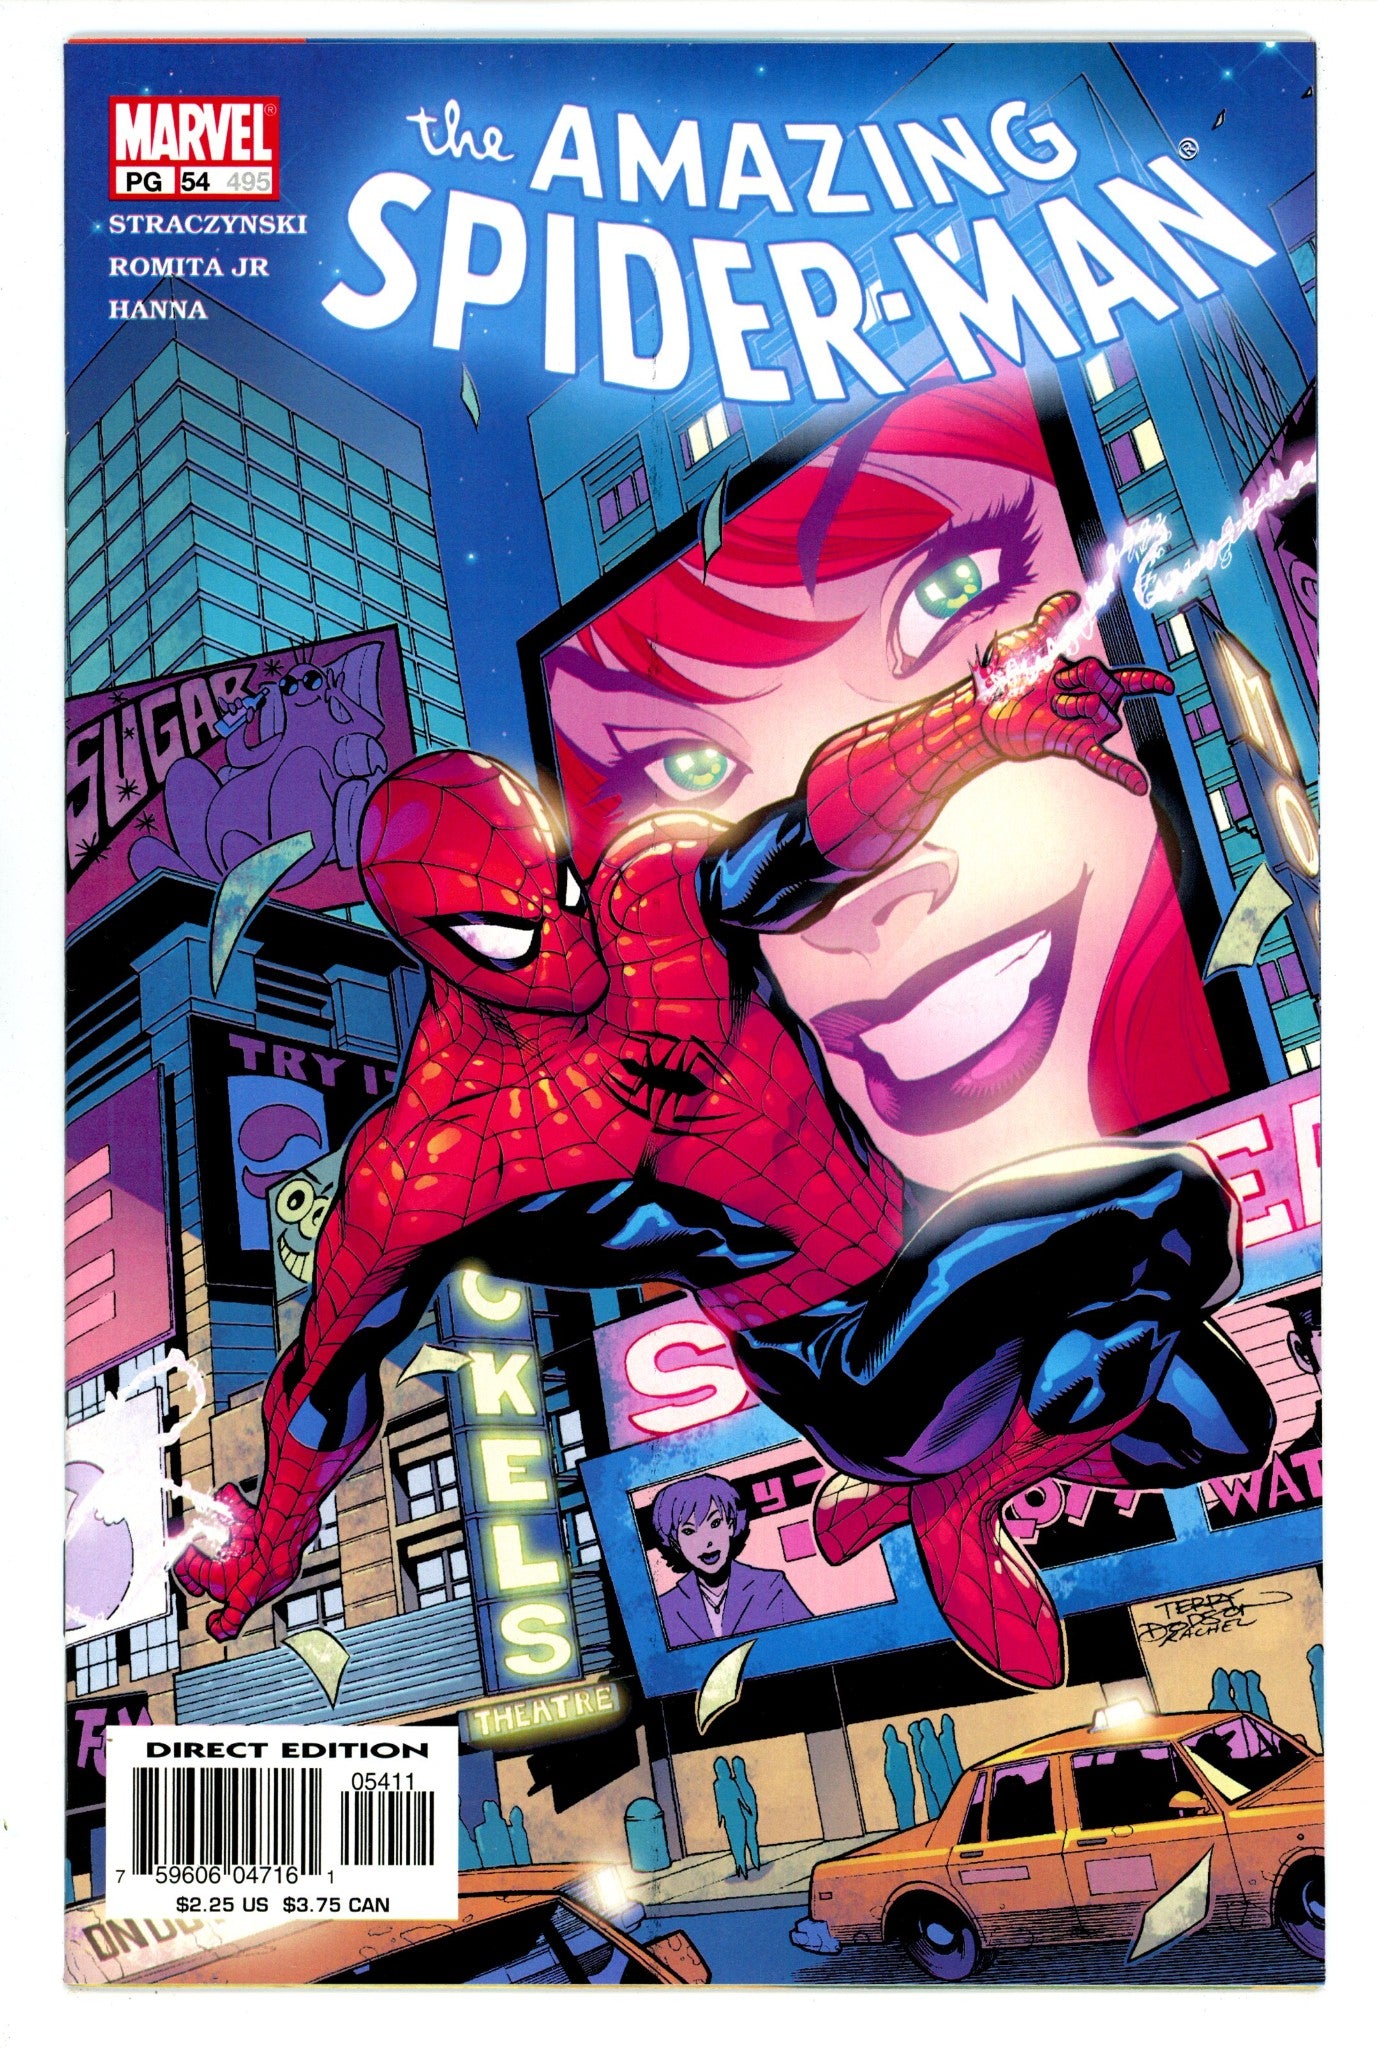 The Amazing Spider-Man Vol 2 54 (495) High Grade (2003) 